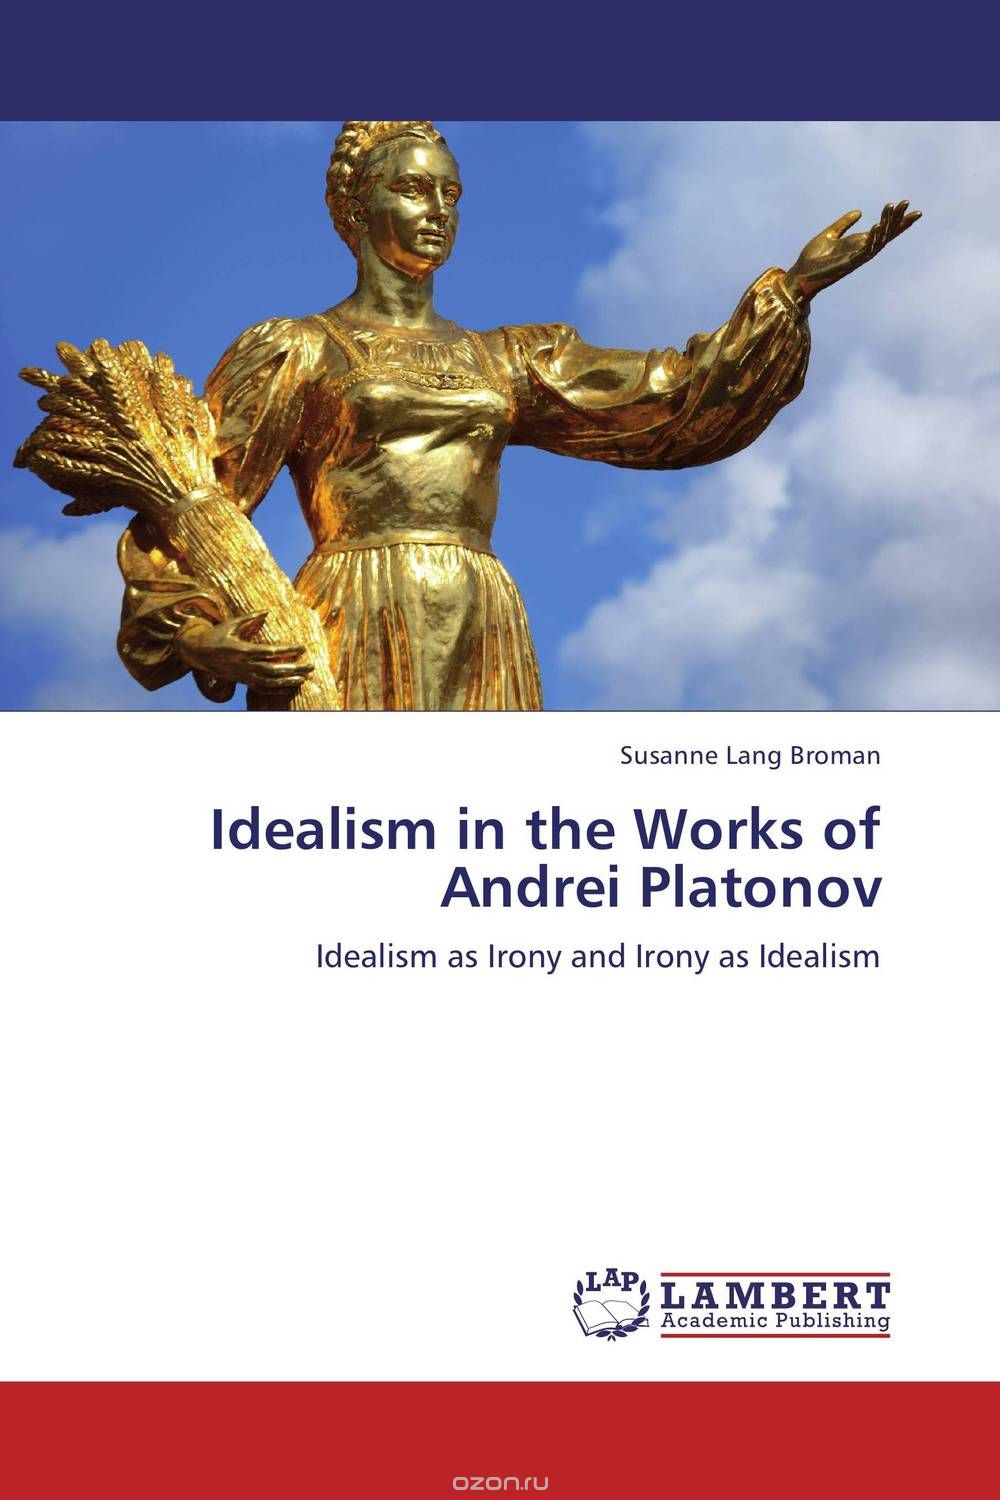 Скачать книгу "Idealism in the Works of Andrei Platonov"